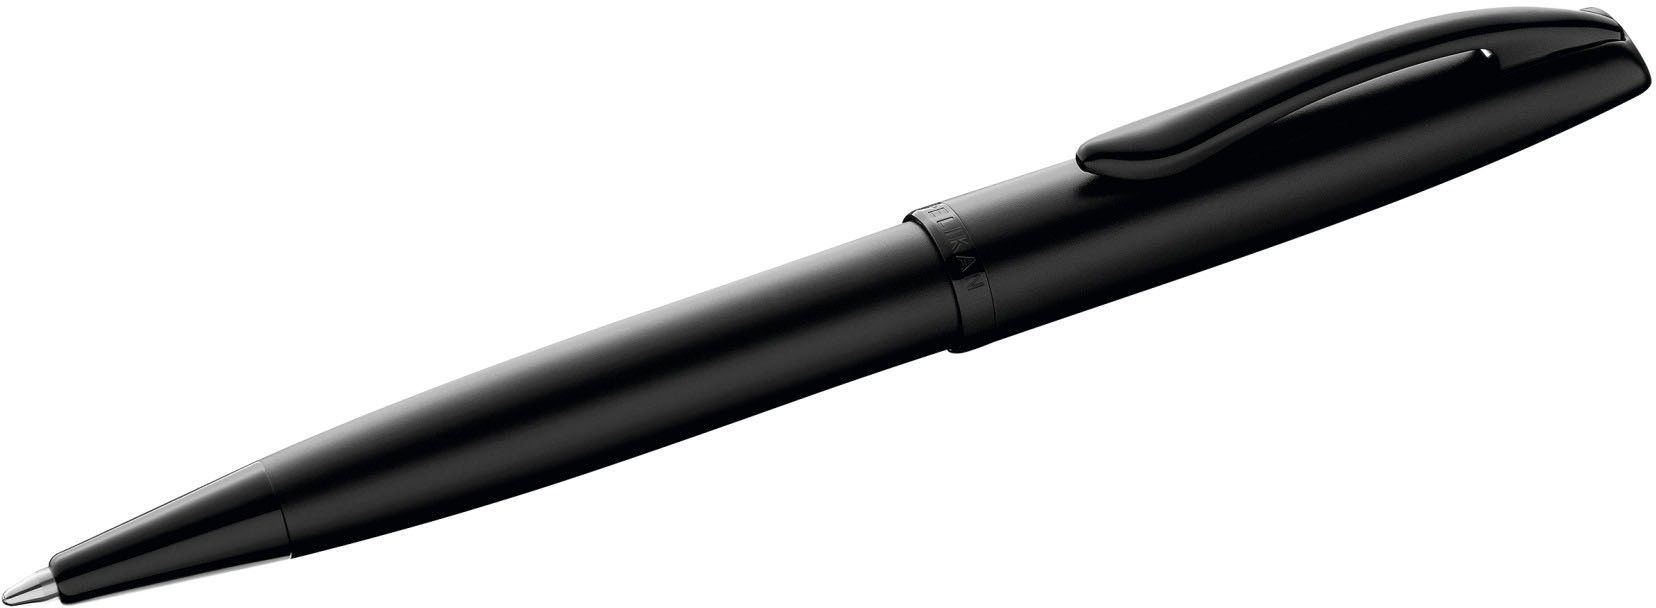 Pelikan Drehkugelschreiber K36 schwarz Noble carbon Elegance, Jazz®